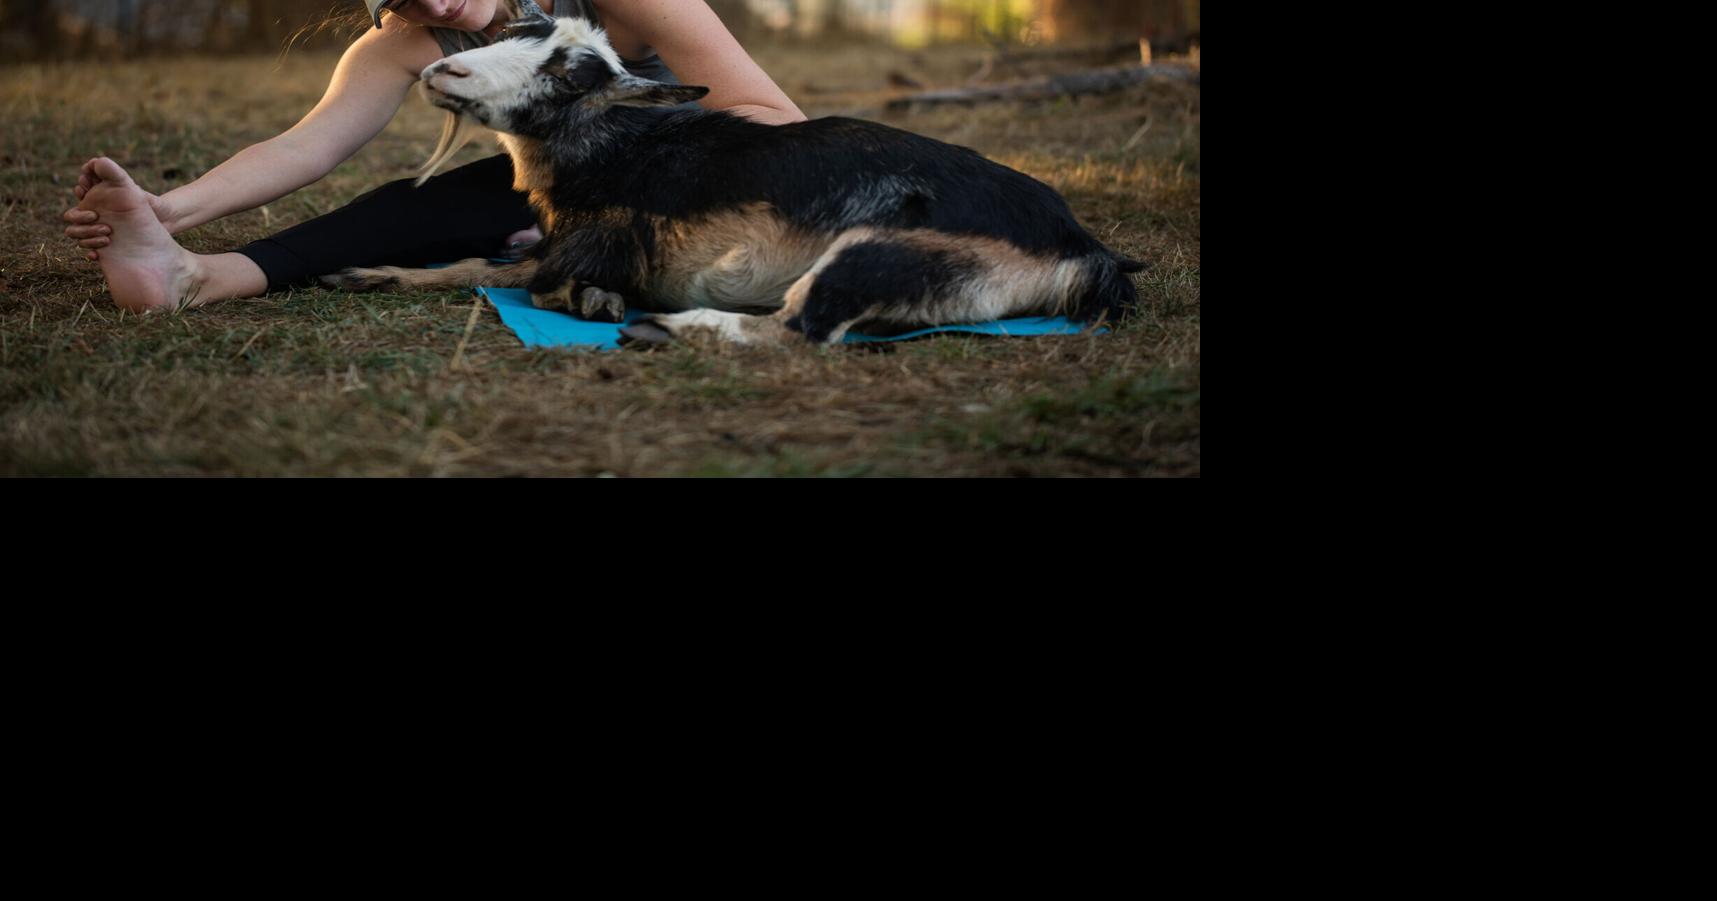 Goat Yoga founder reopens Monroe farm for public classes